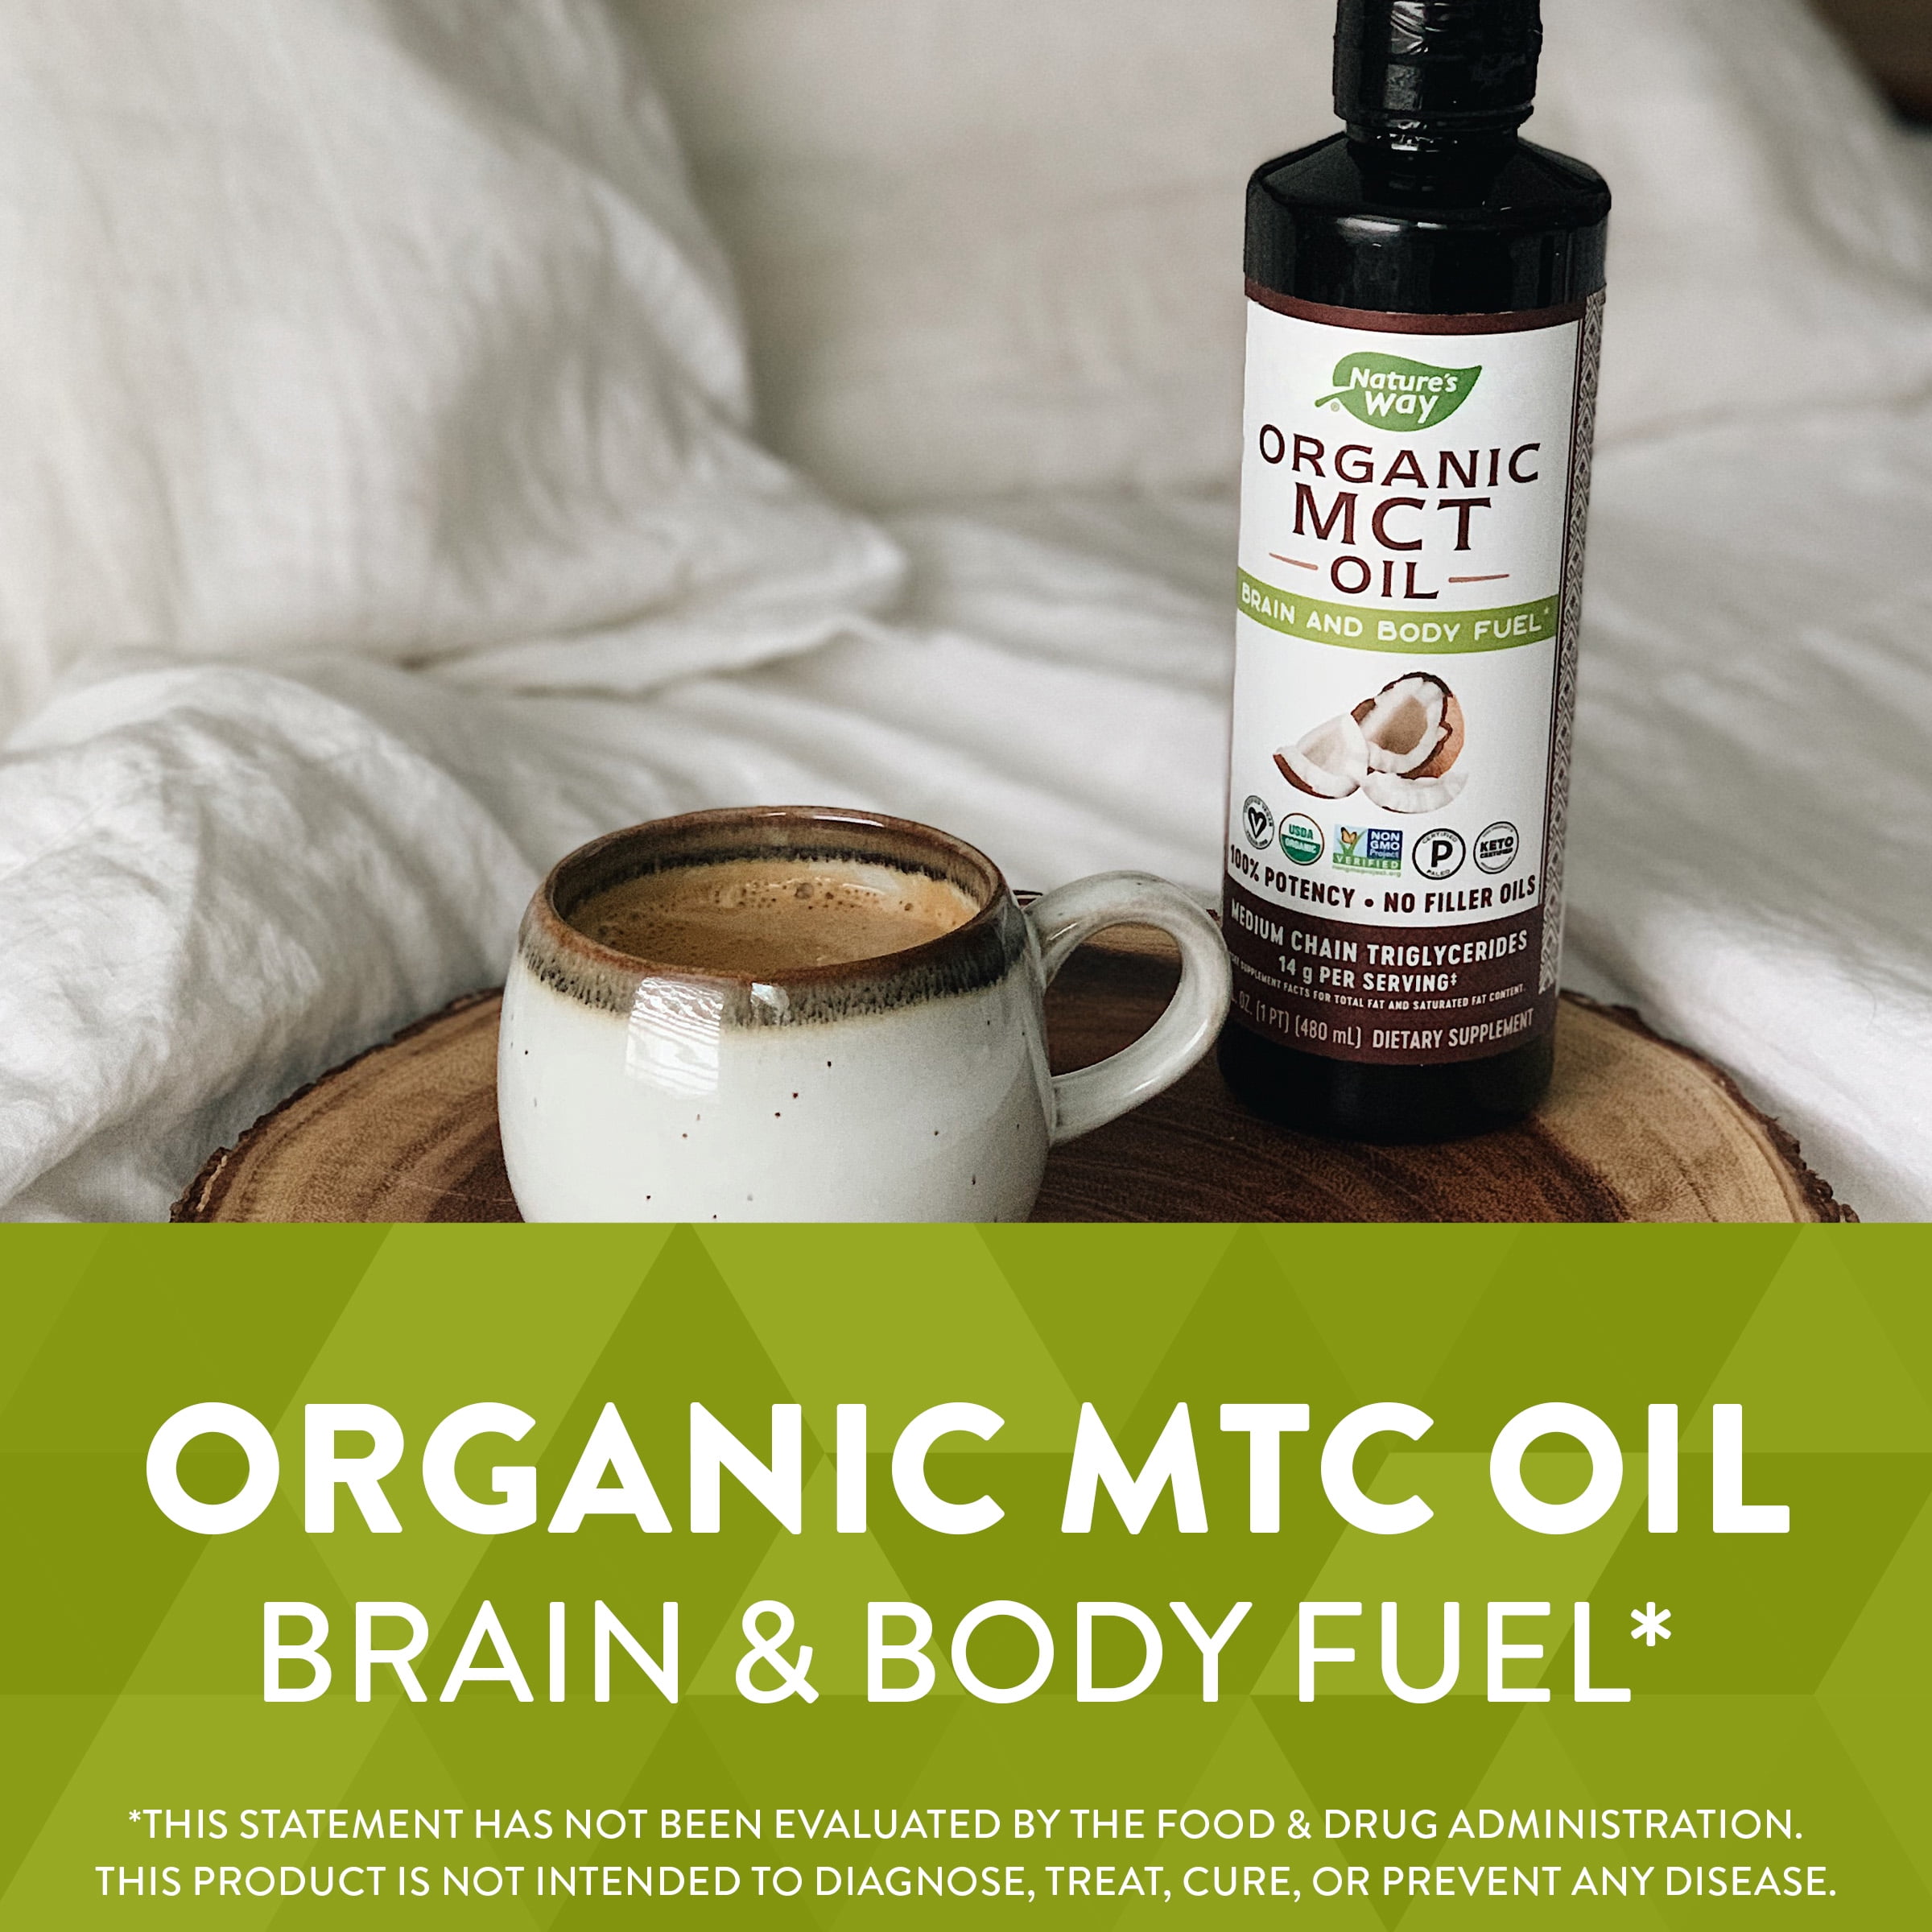 Nature's Way 100% Potency Organic MCT Oil, 16 fl oz 